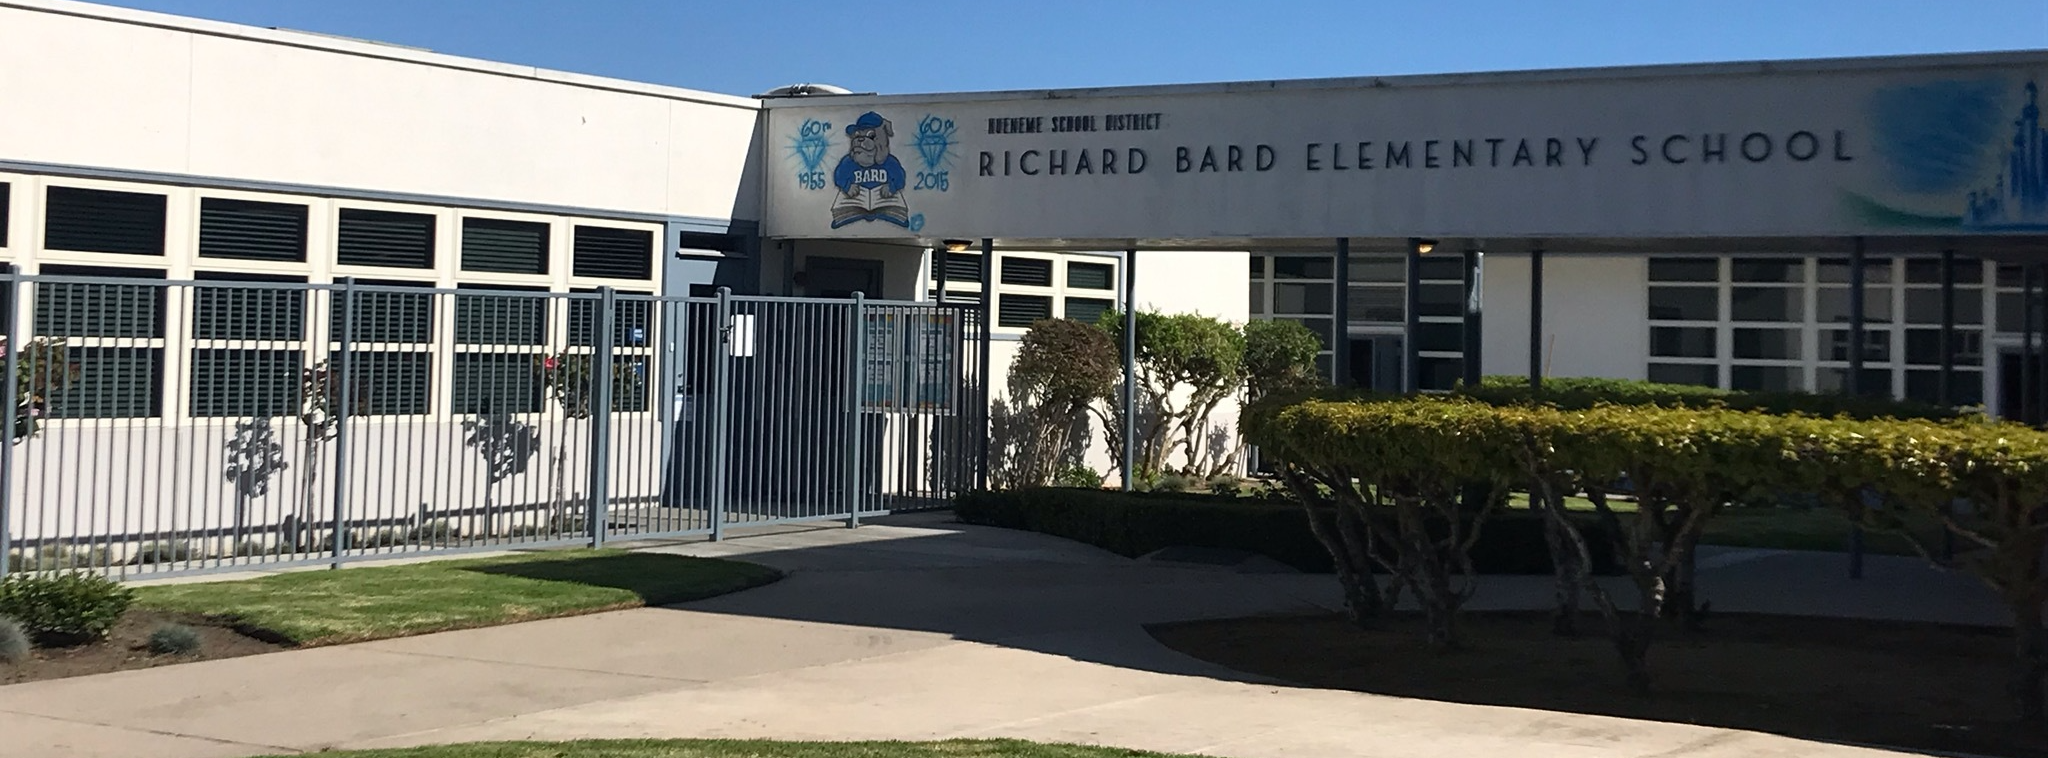 Richard Bard Elementary School campus